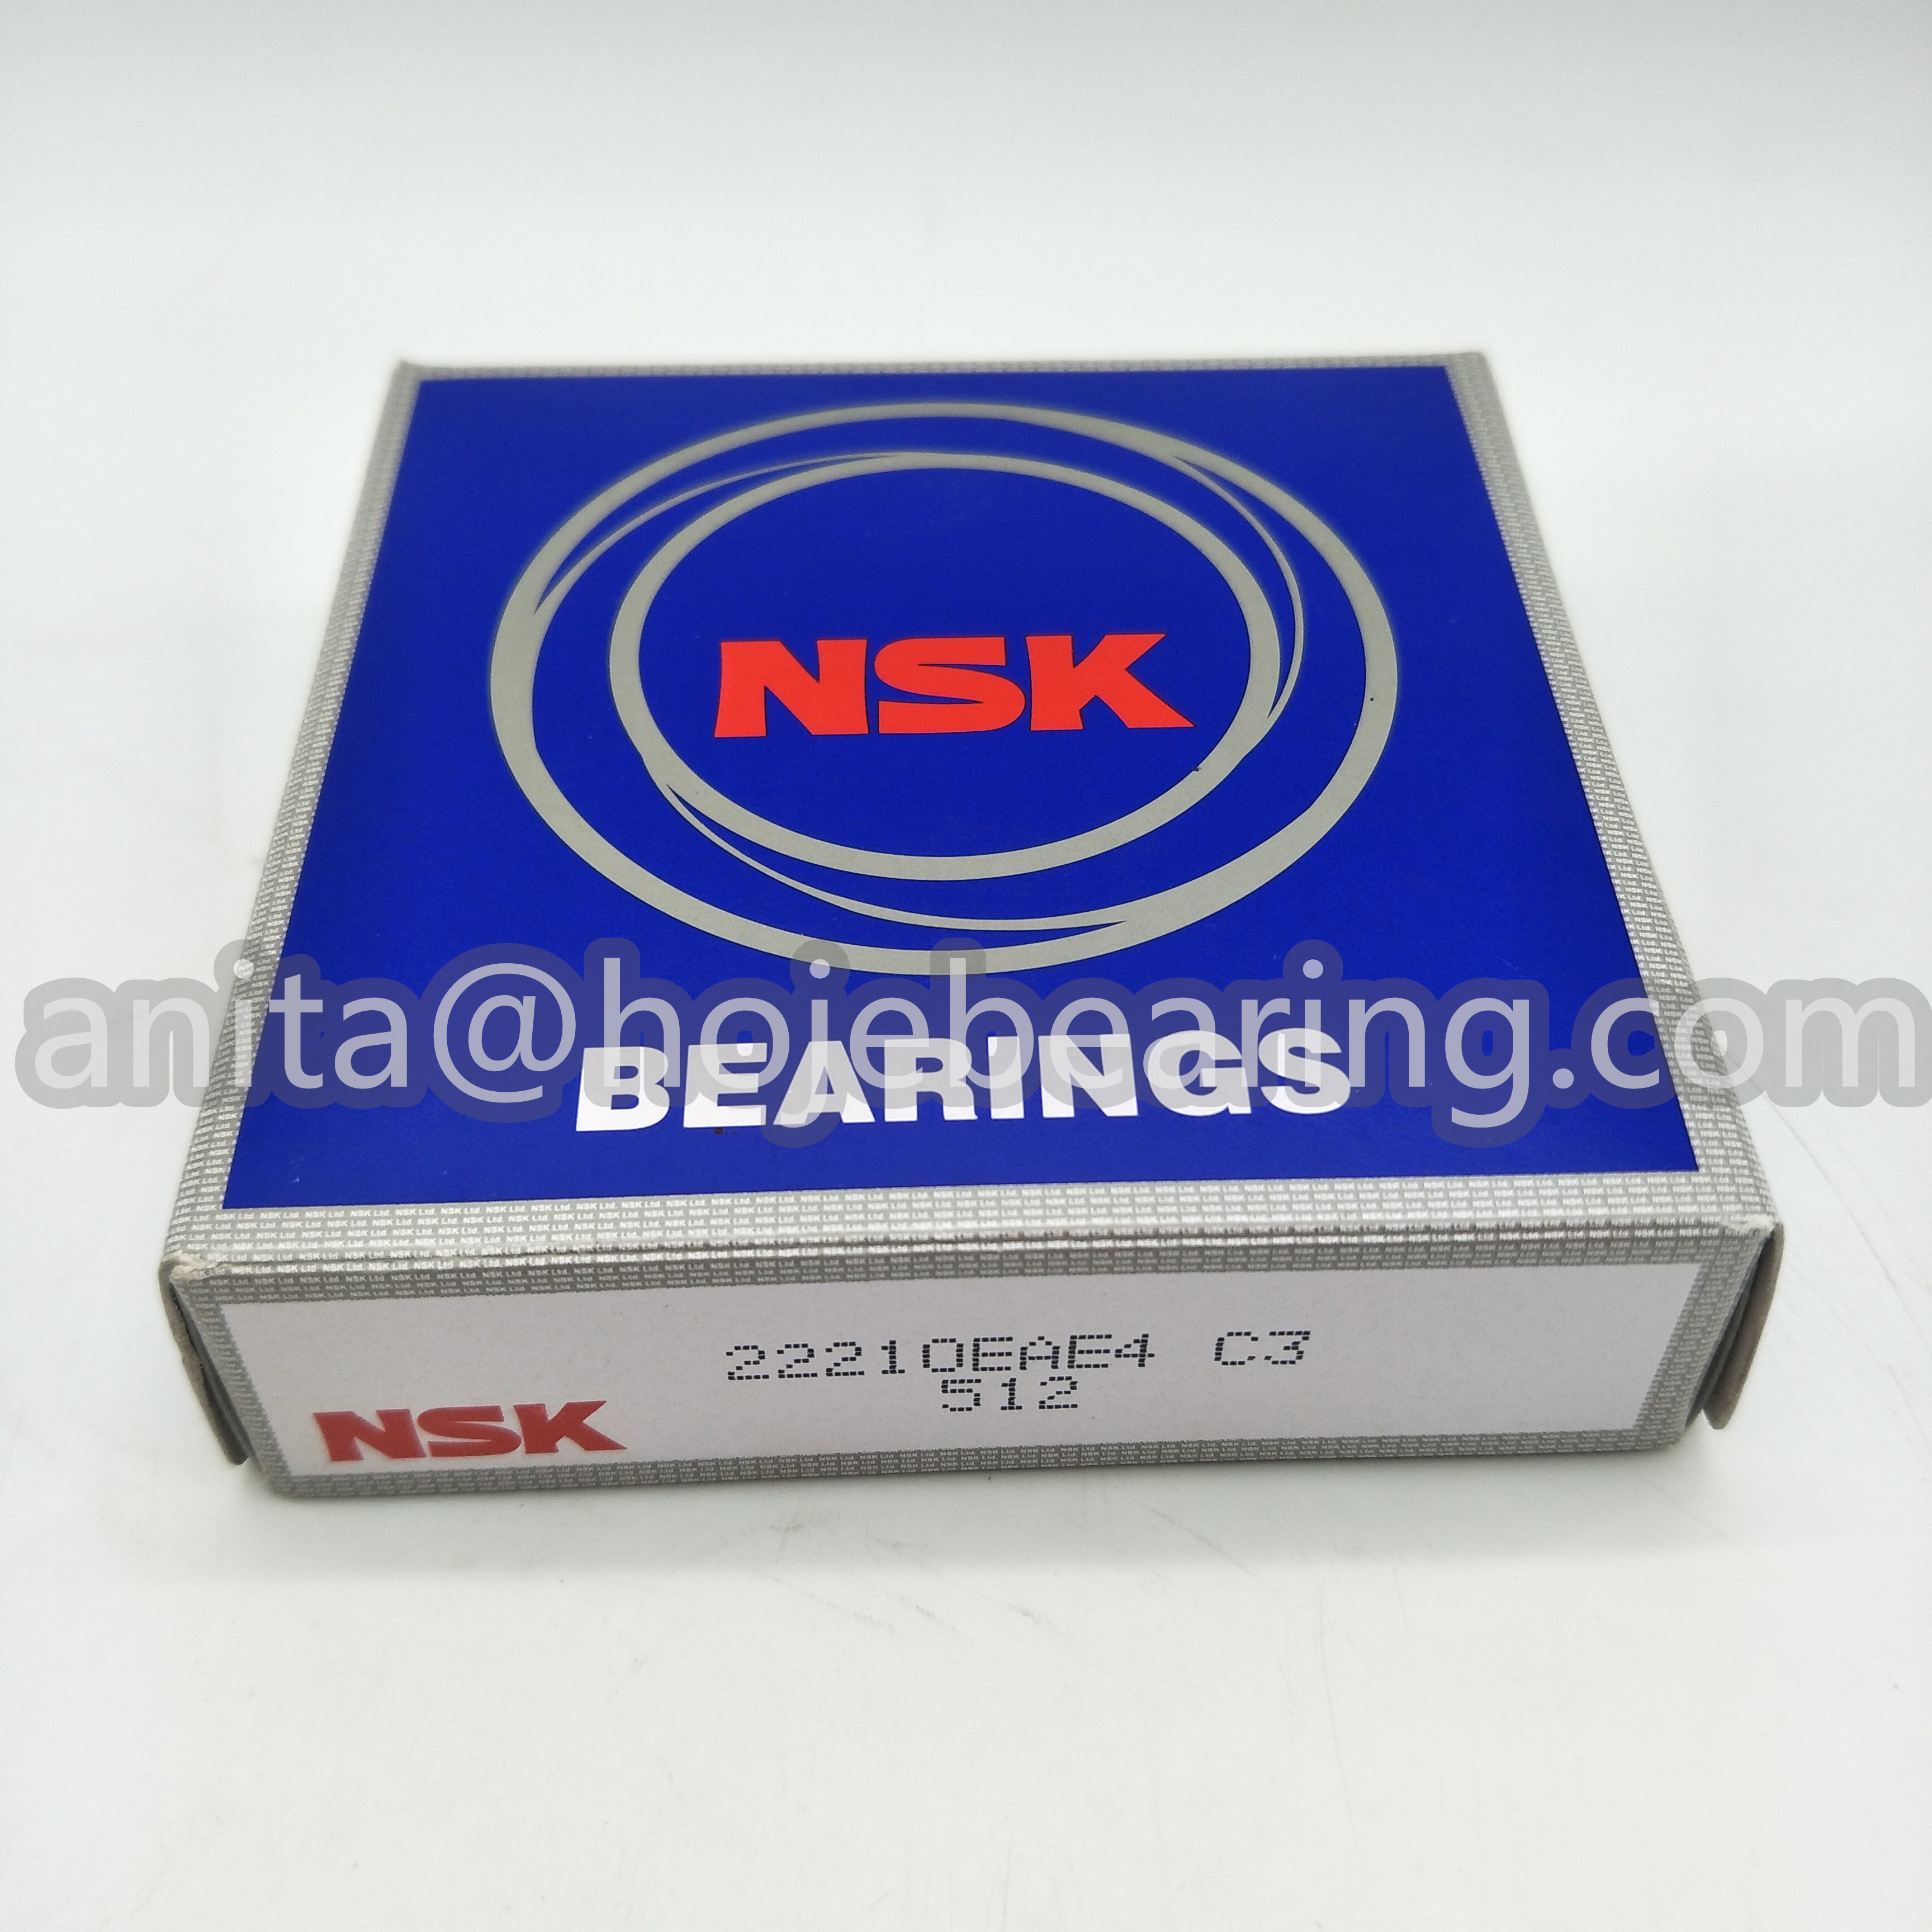 NSK 22210EAE4 Spherical Roller Bearing, Round Bore, Pressed Steel Cage, Metric, 50mm Bore, 90mm OD, 23mm Width